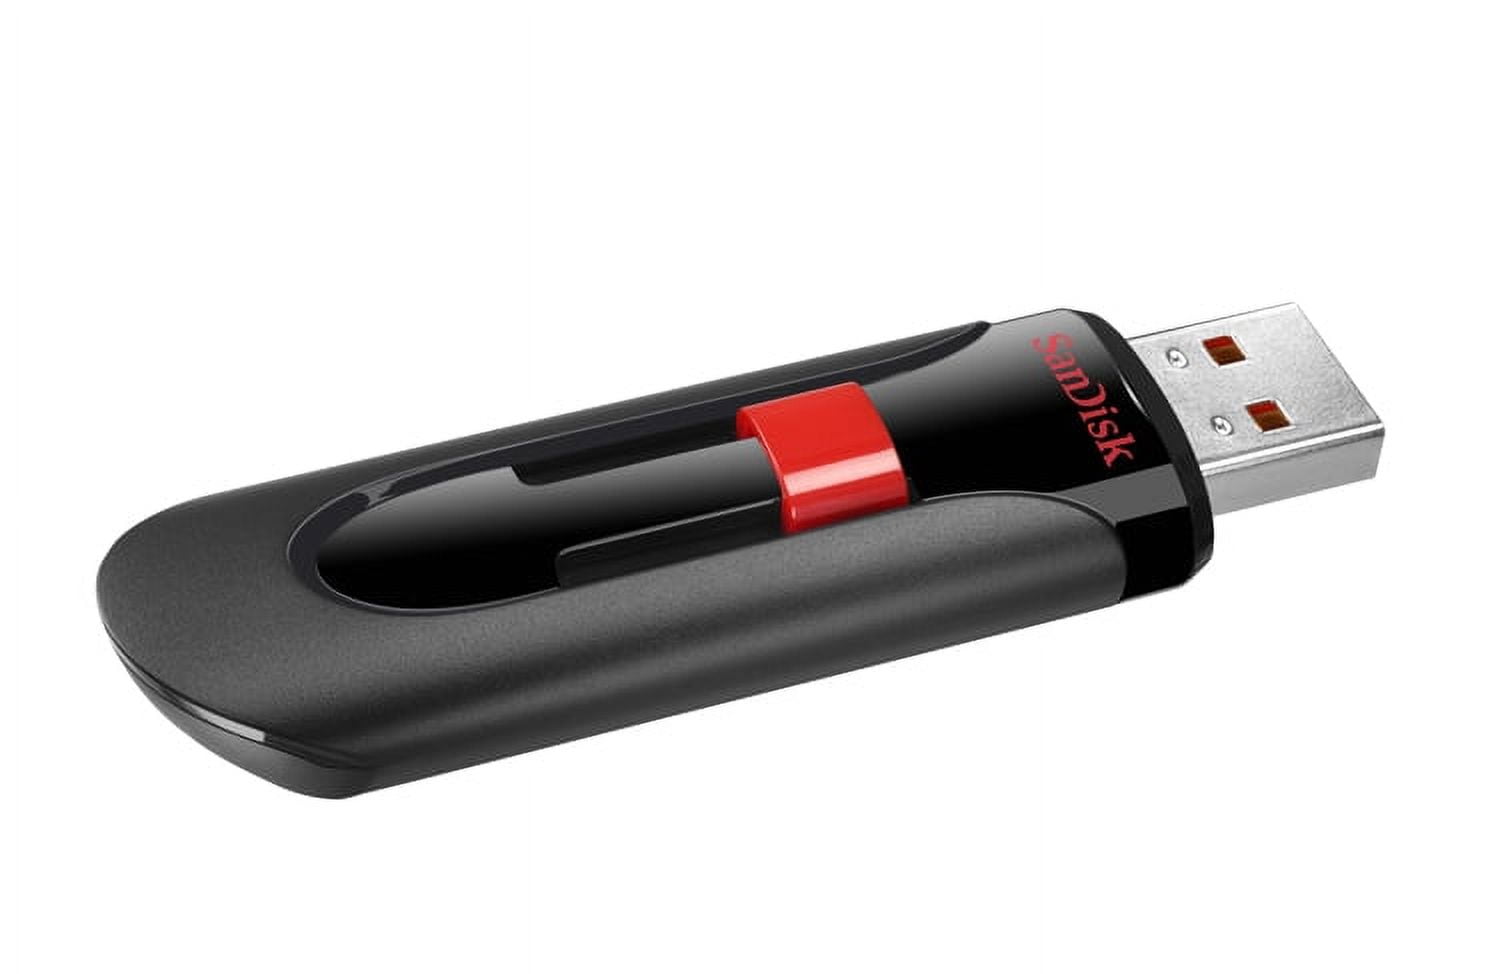 SanDisk 128GB Cruzer Glide USB 2.0 Flash Drive 2 Pack - SDCZ60-128G-AW462 